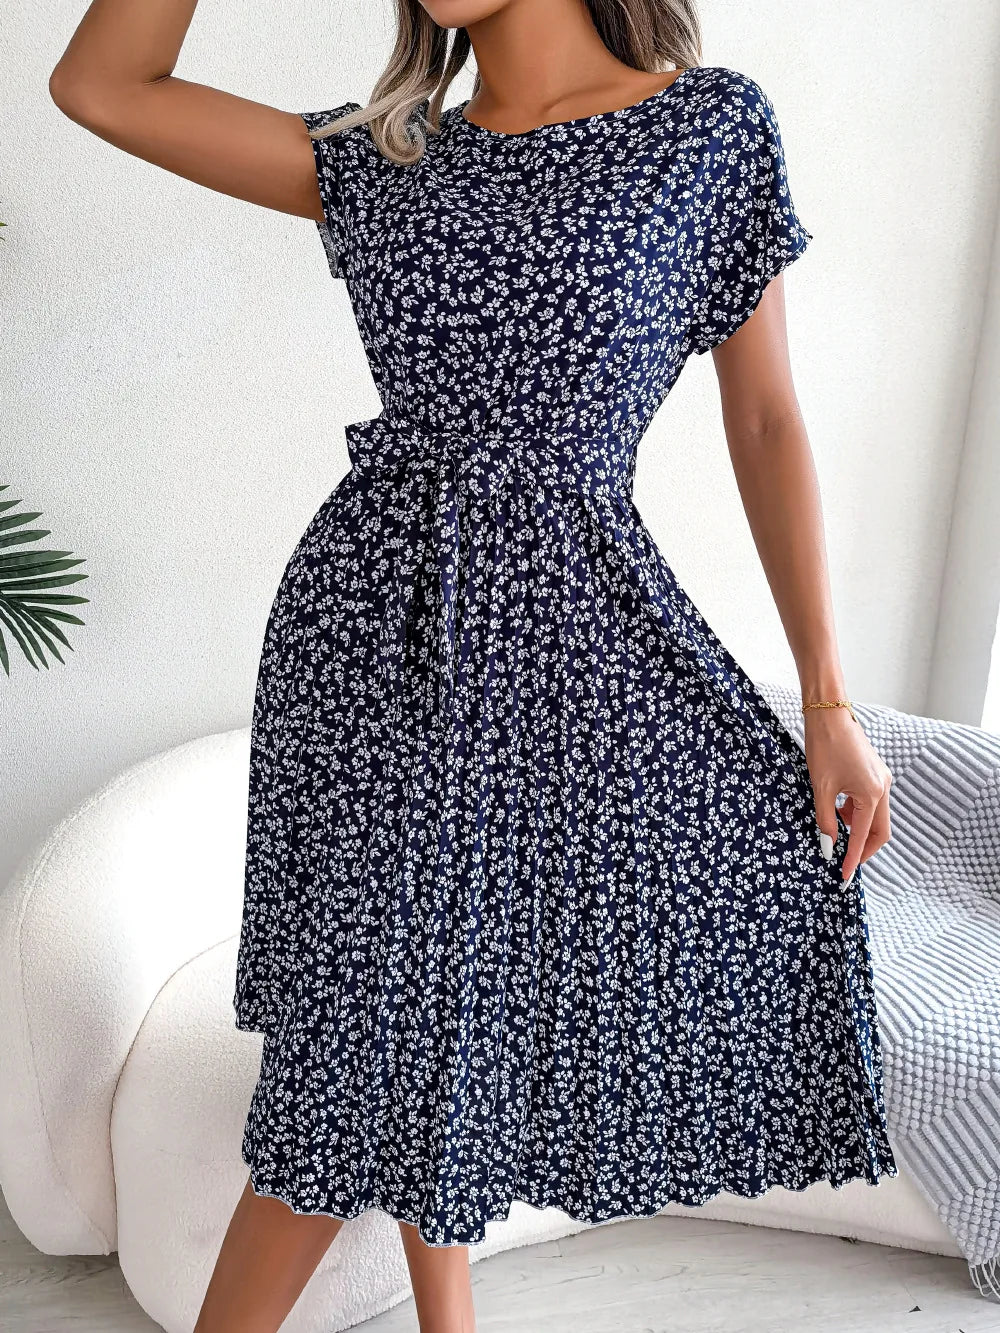 Deep Blue Spring/Summer Floral Pleated A-Line Dress with Short Sleeves - Effortlessly Elegant